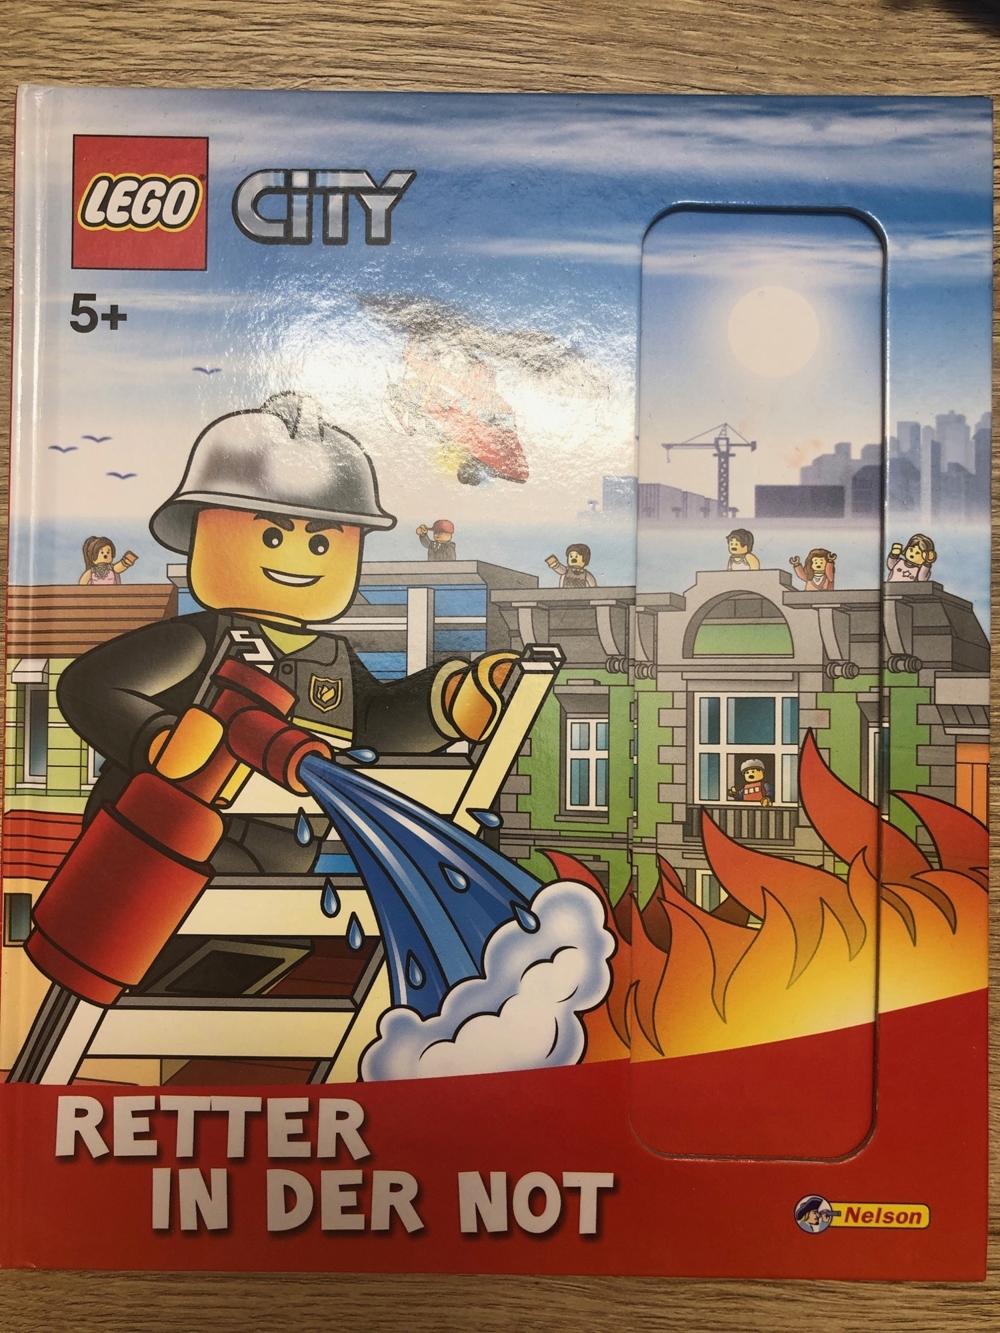 Lego City  Retter in der Not  Hardcover ohne Elemente  5+